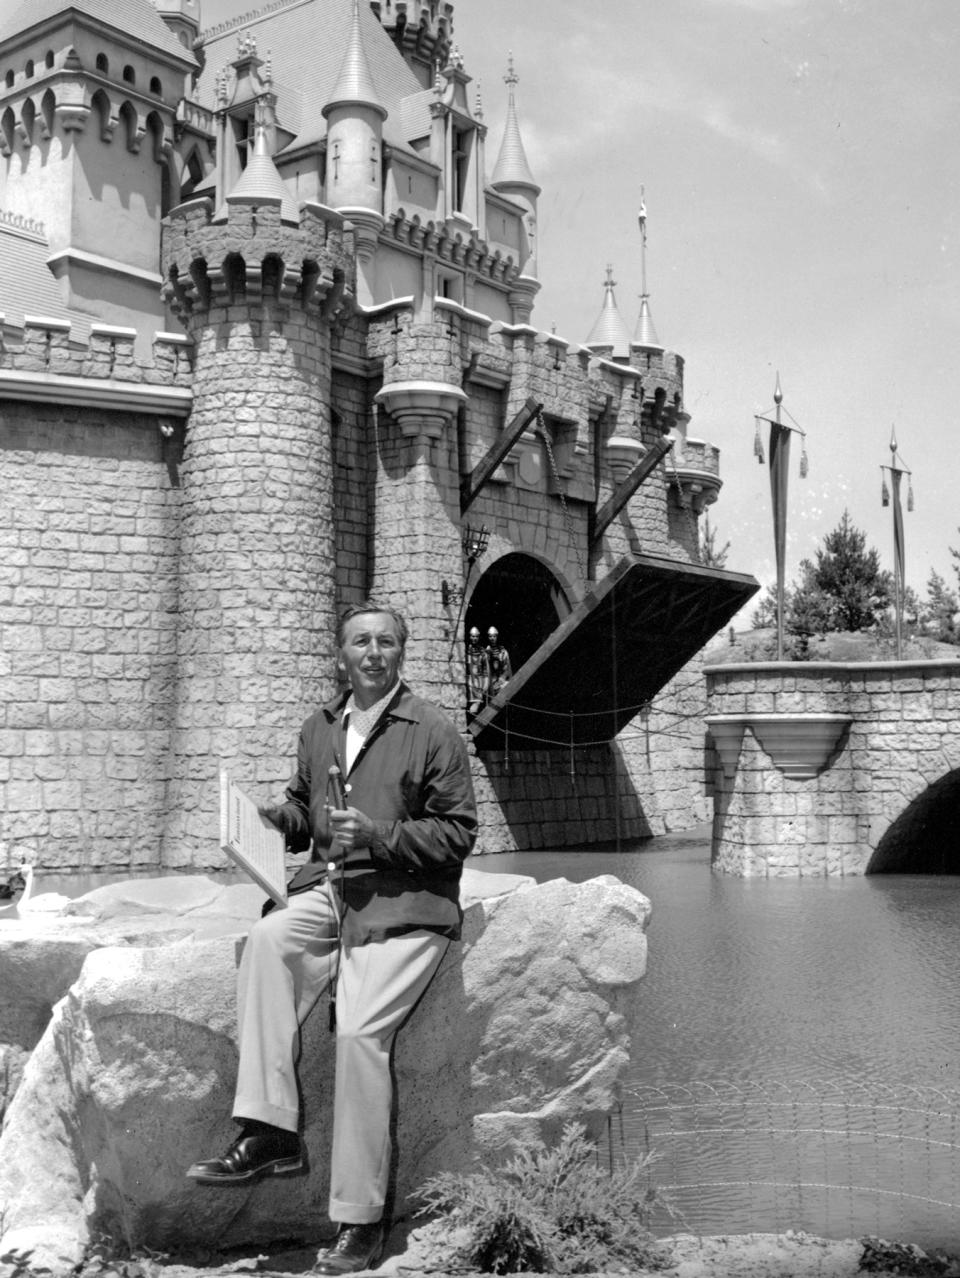 1955: Disneyland Opens in California